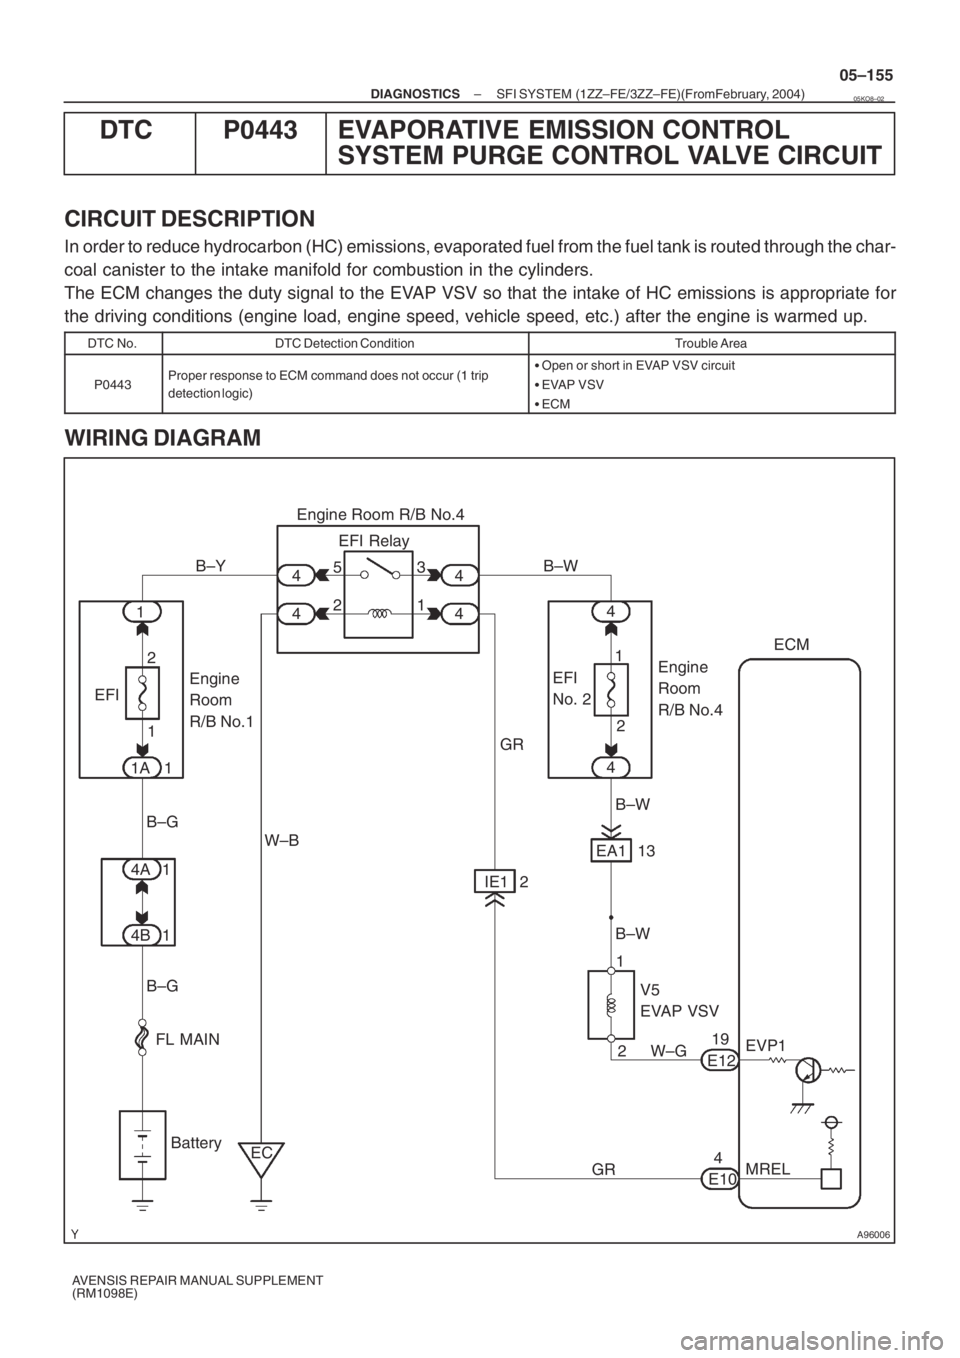 TOYOTA AVENSIS 2005  Service Repair Manual A96006
2
EFI
1 1
FL MAINW–BEFI Relay
1 43 5
2
EA1
B–W
V5 
EVAP VSV
219
E12
MREL 4
E10 44
44
42 1
B–W
W–G 1 IE1 2
GR13
EC 1 1A
4A
4B1
1
B–G
BatteryB–W
EFI 
No. 2 B–Y
B–G
EVP1ECM
Engine 